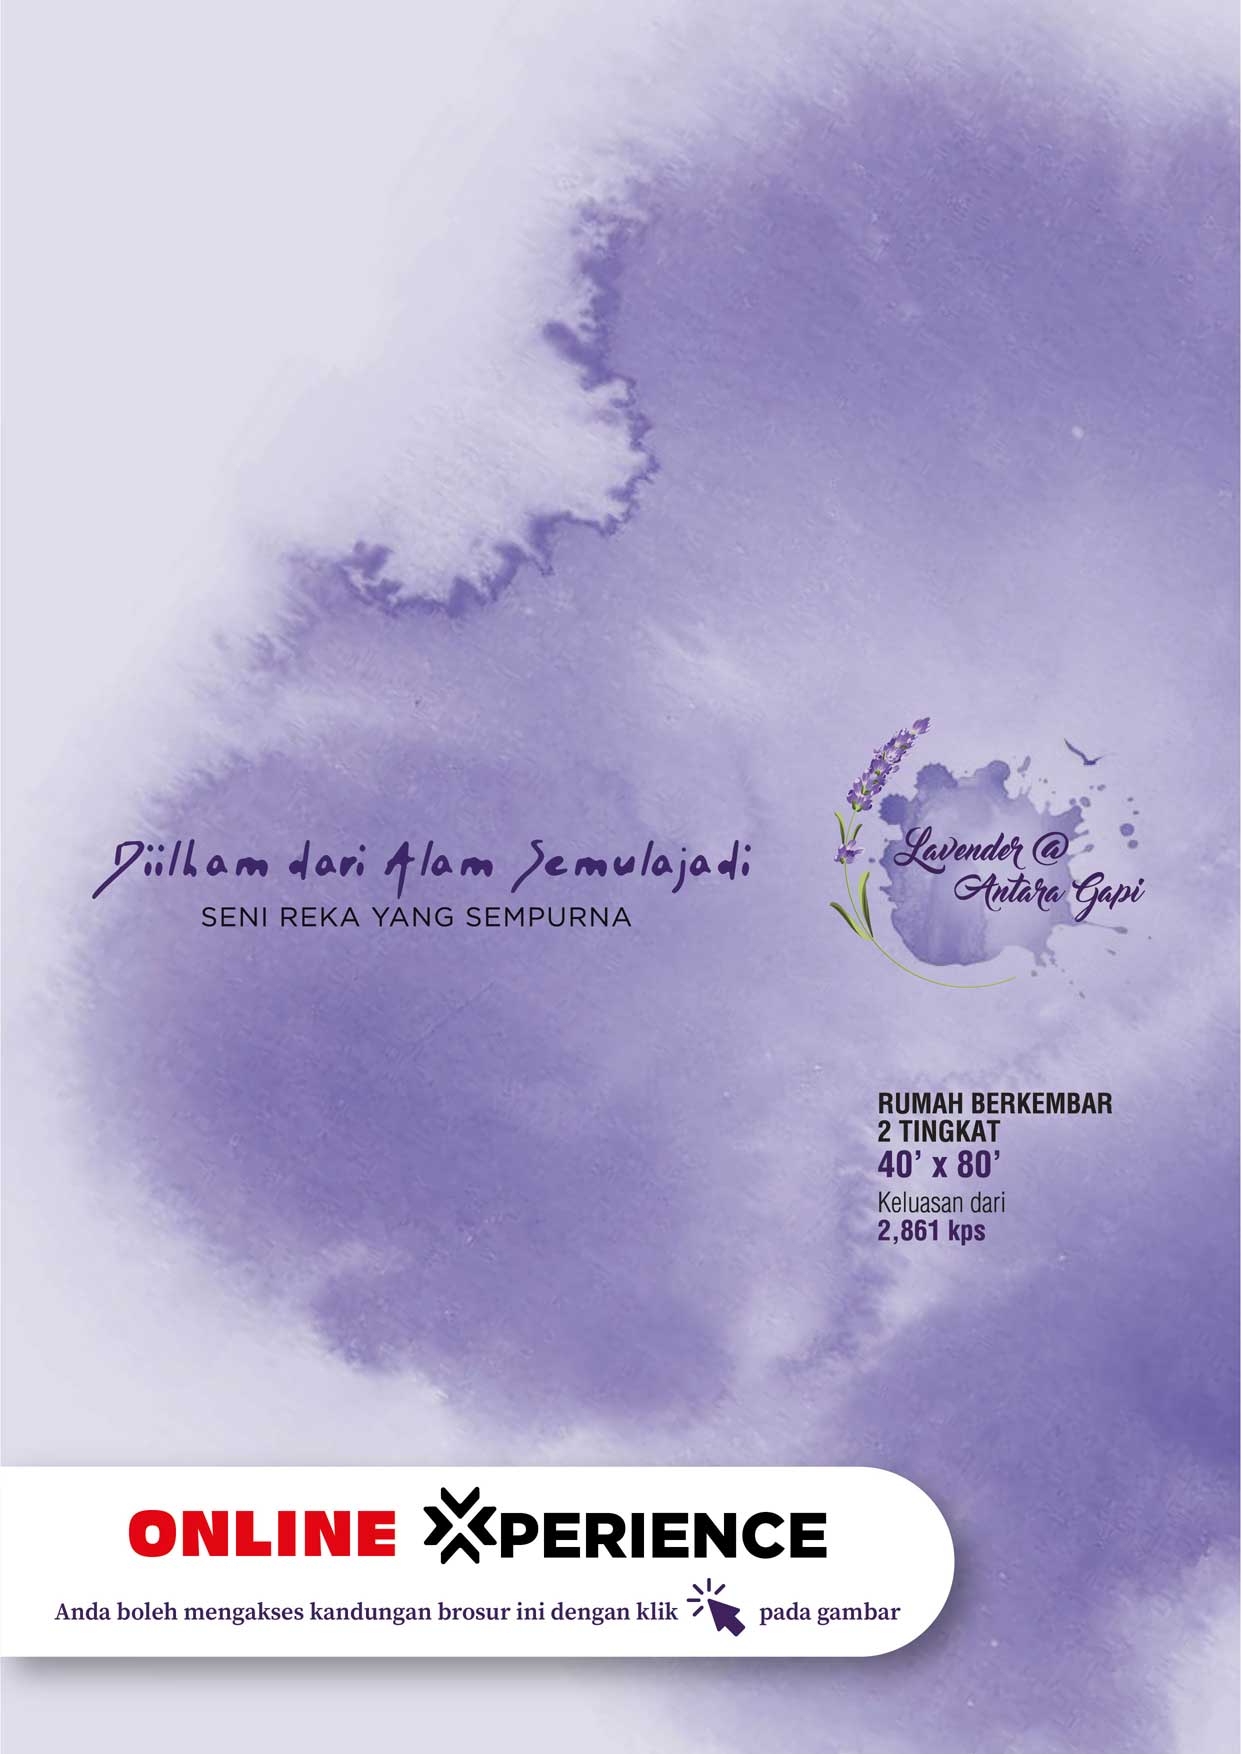 Muat turun brosur interatif PKNS - Lavender - Antara Gapi